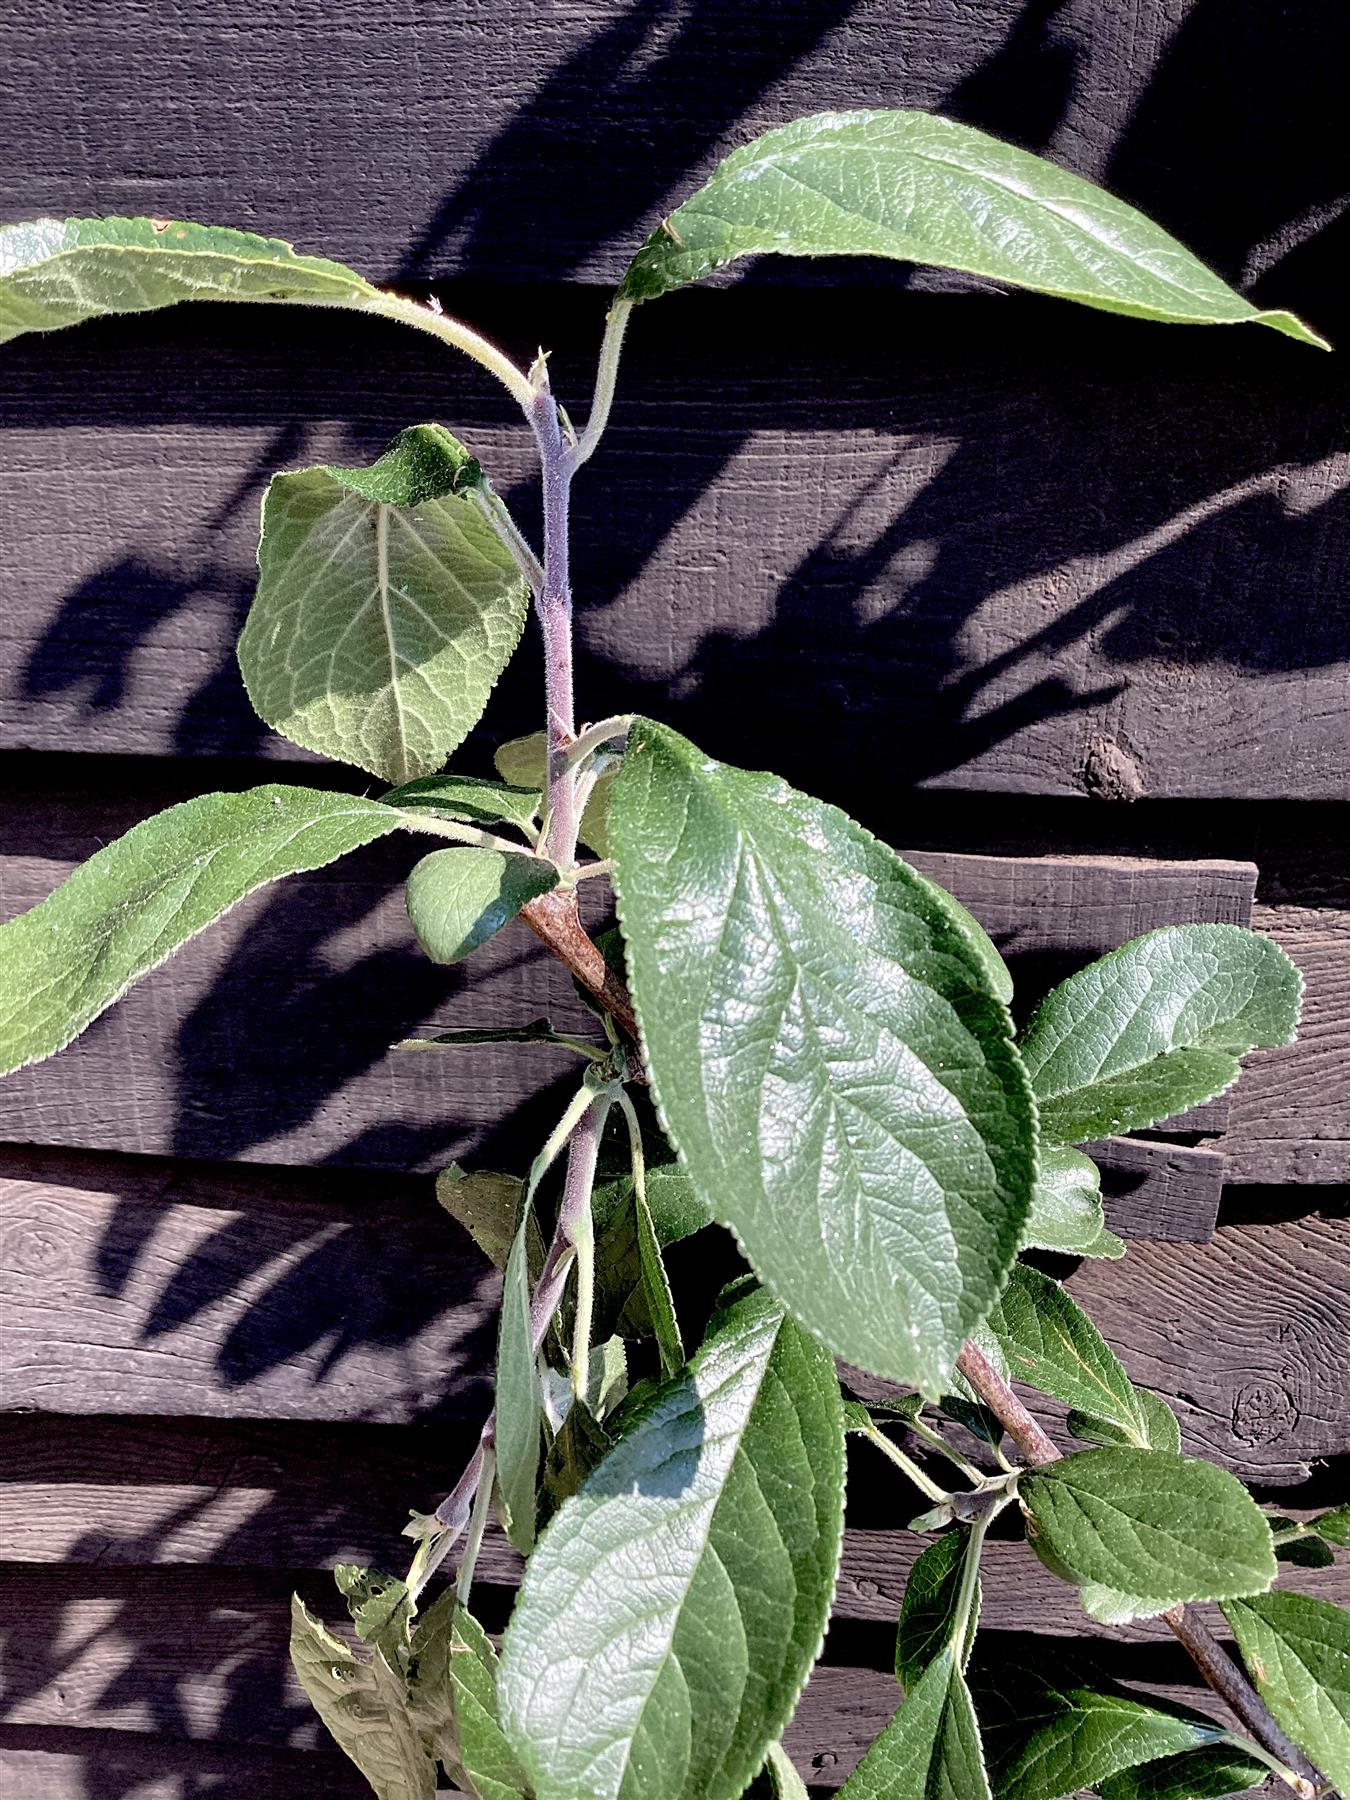 Plum 'Victoria' on Pixy - Dwarfing | Prunus Domestica - 150-160cm - 12lt